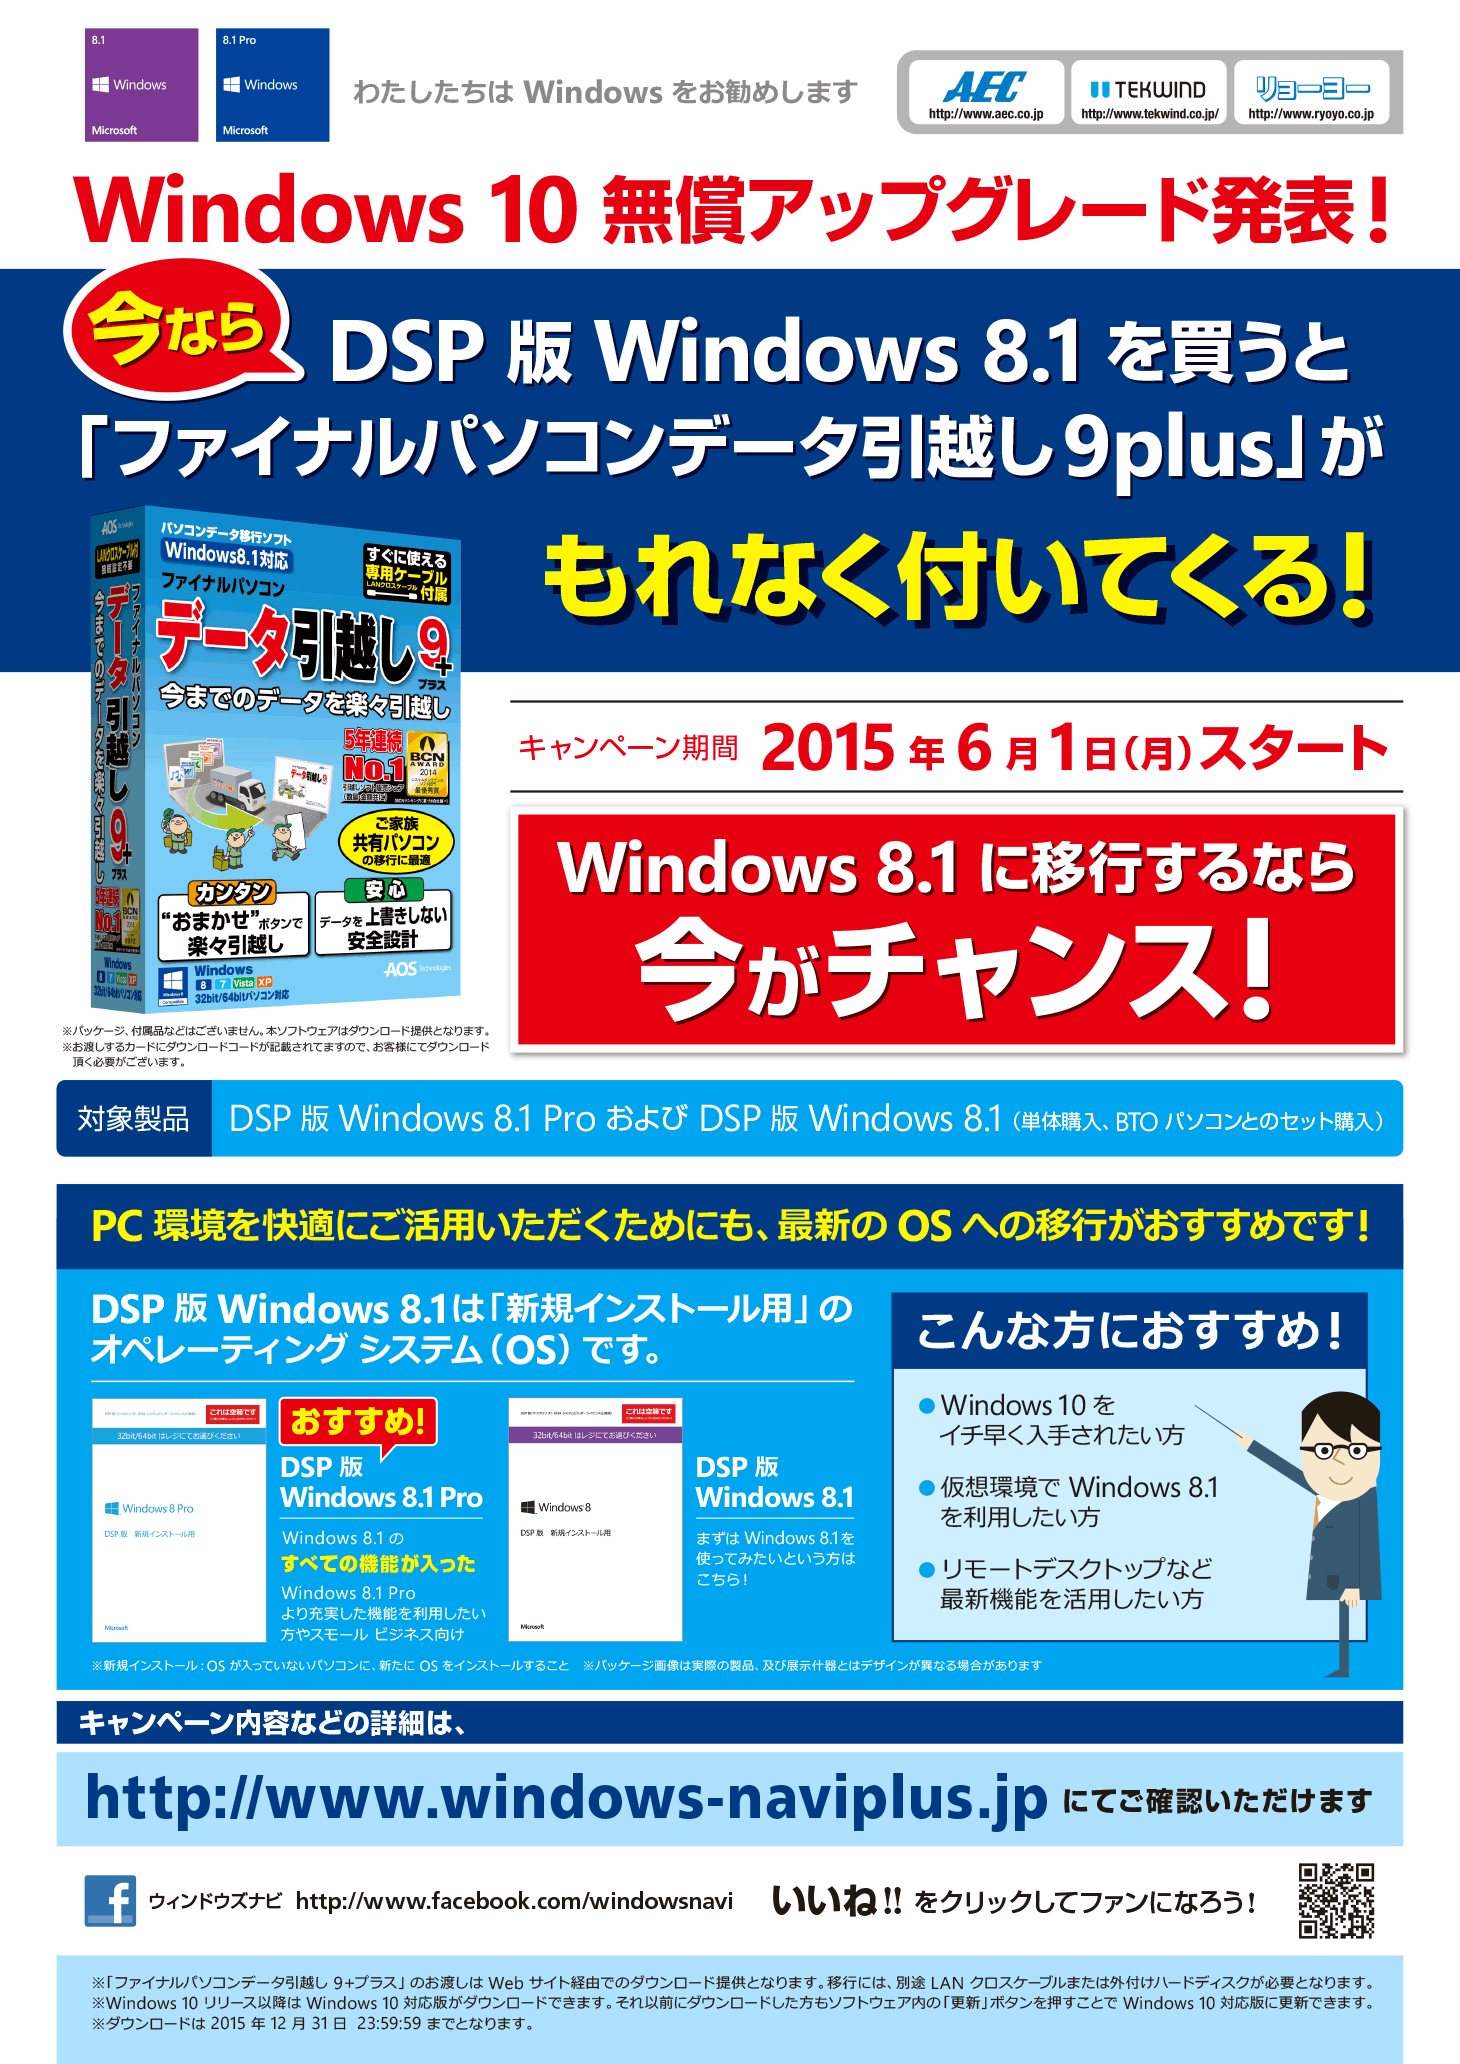 DSP版 Windows 8.1 らくらく引越しソフト付きキャンペーン